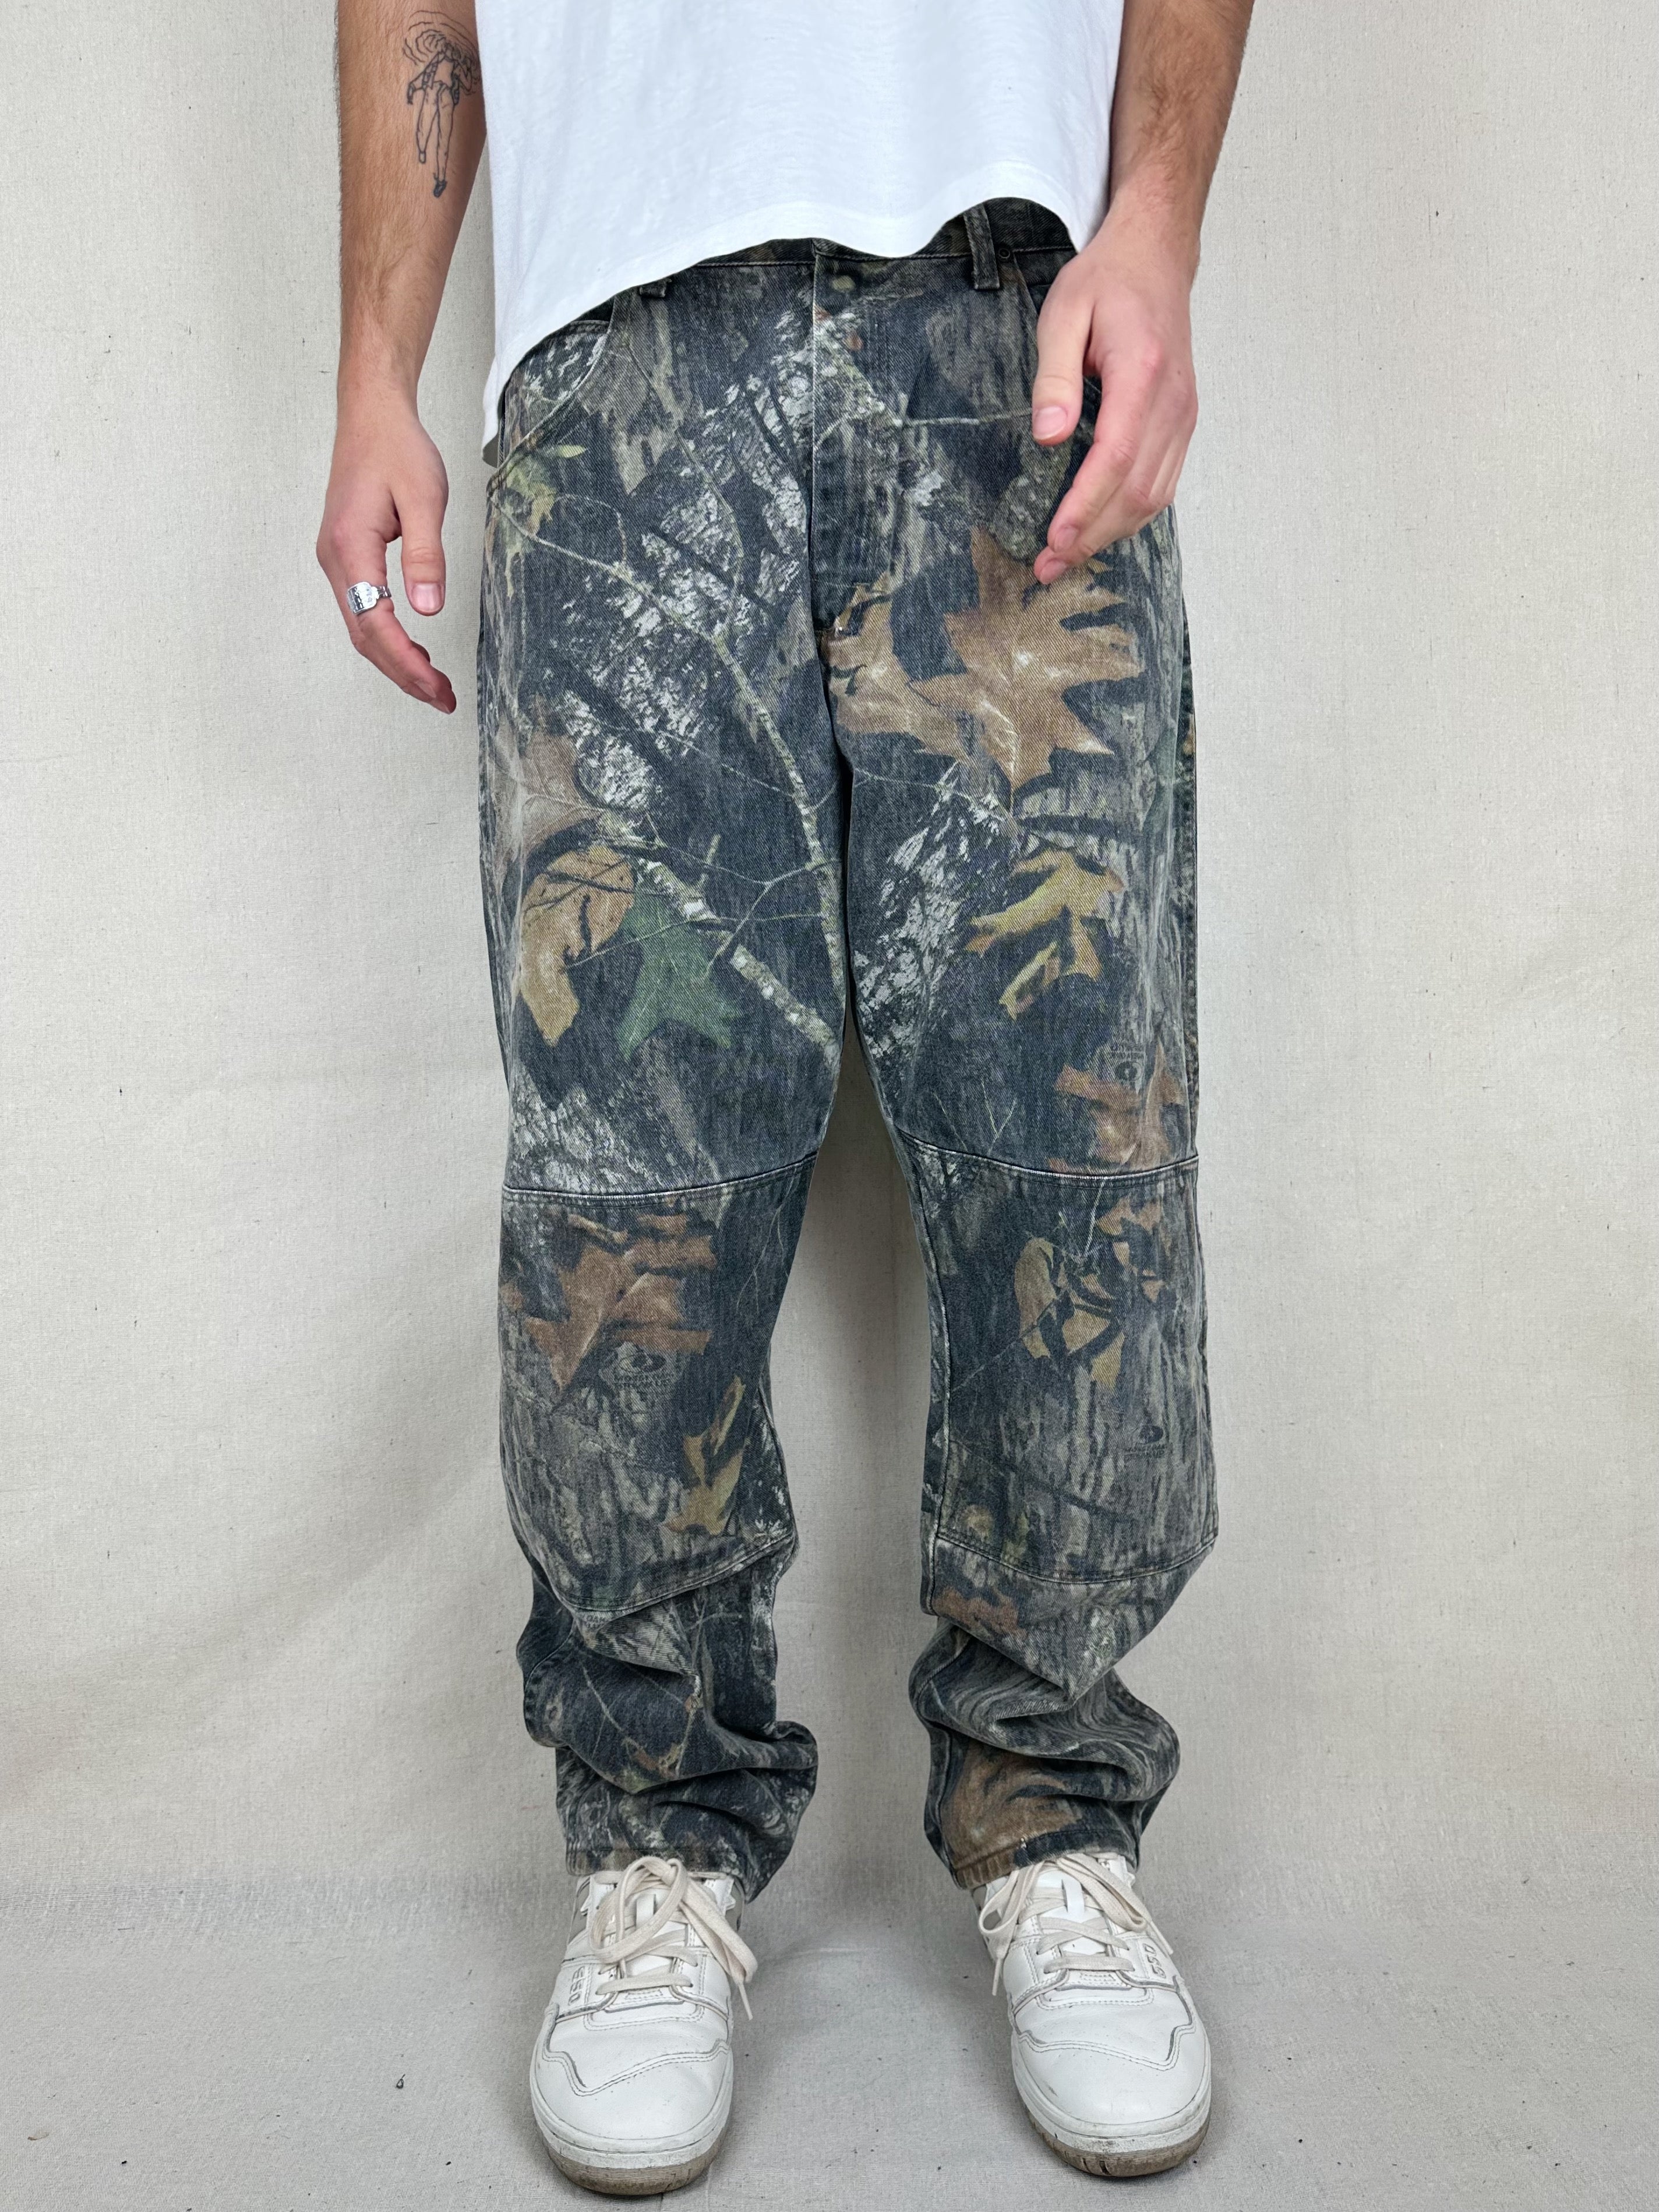 Pro Gear By Wrangler Realtree Camo Hunting Pants Mens Size 38x30 | eBay